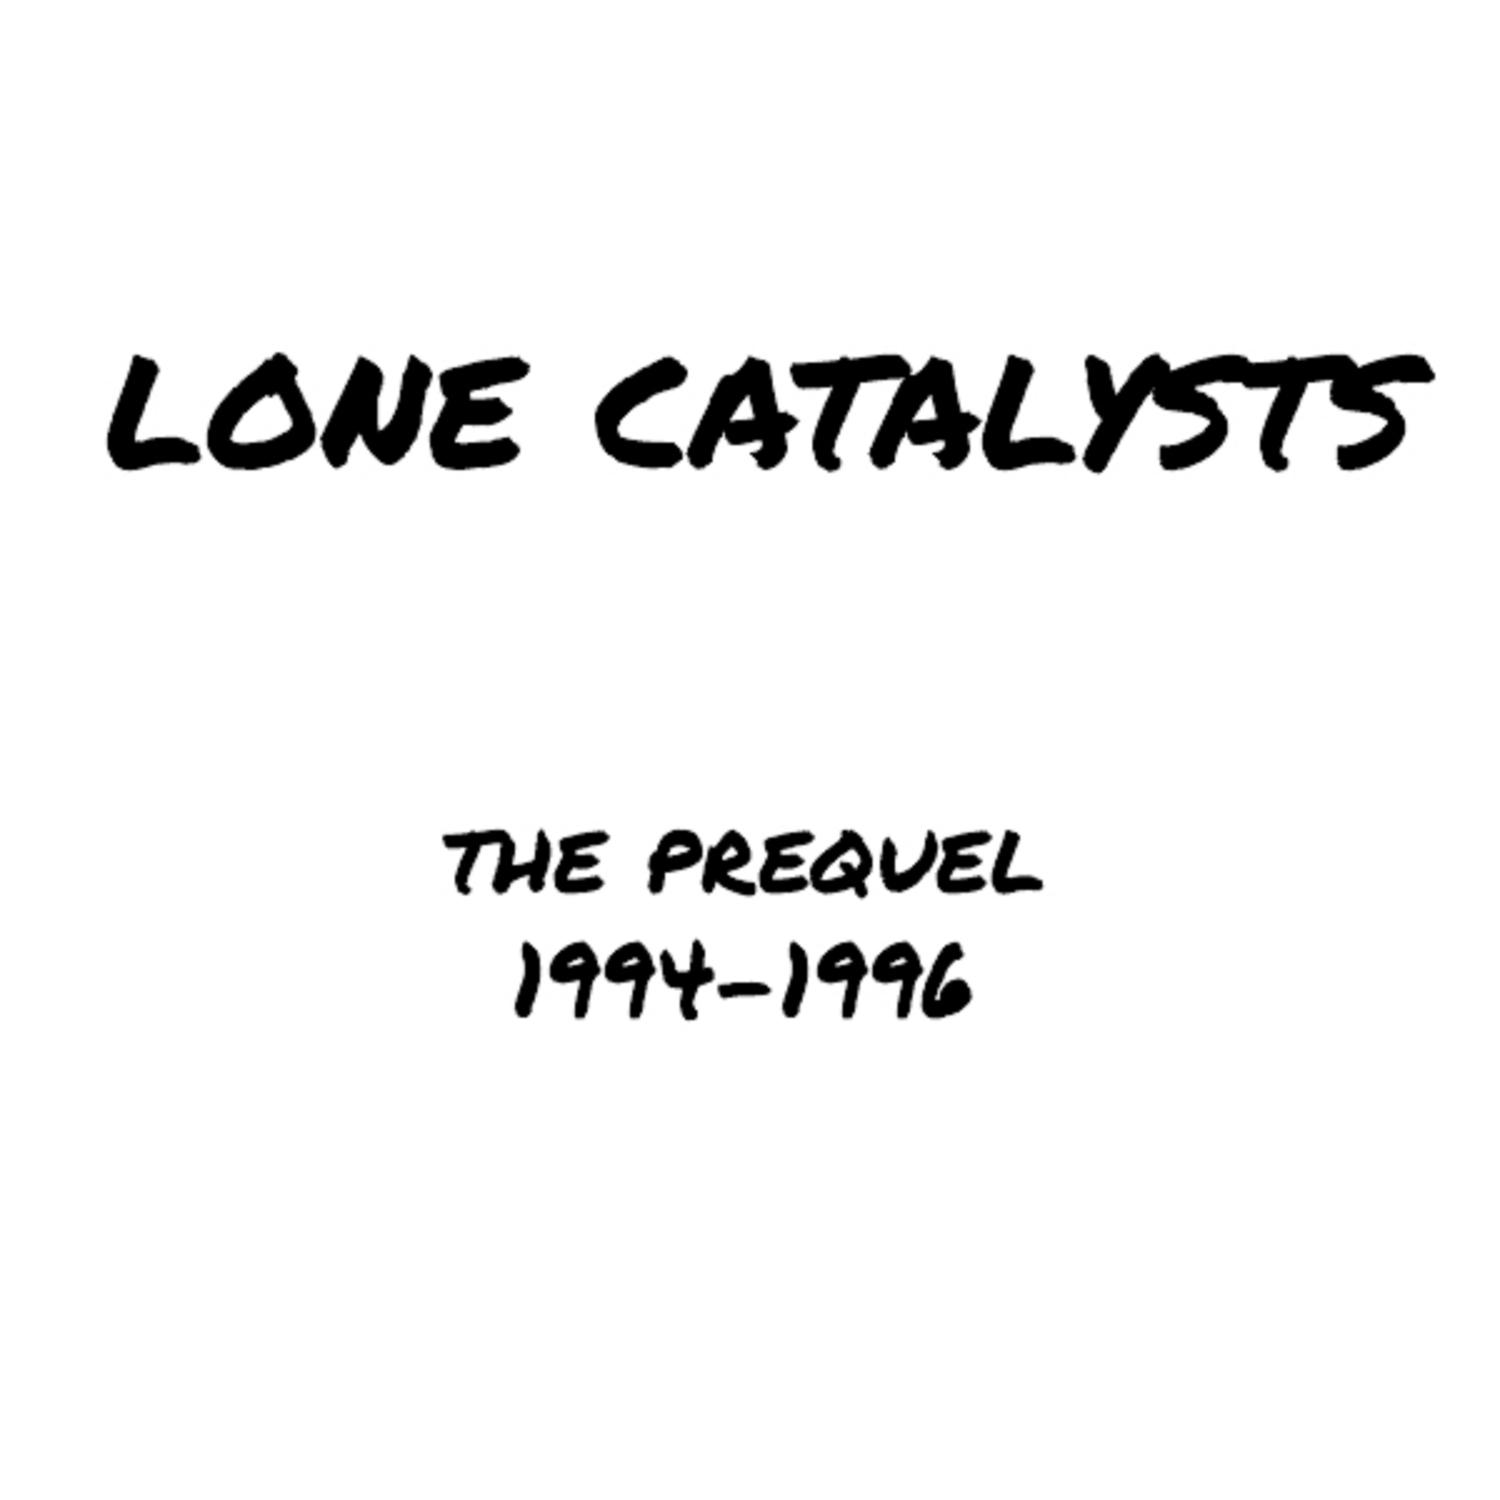 Lone Catalysts - Revolving